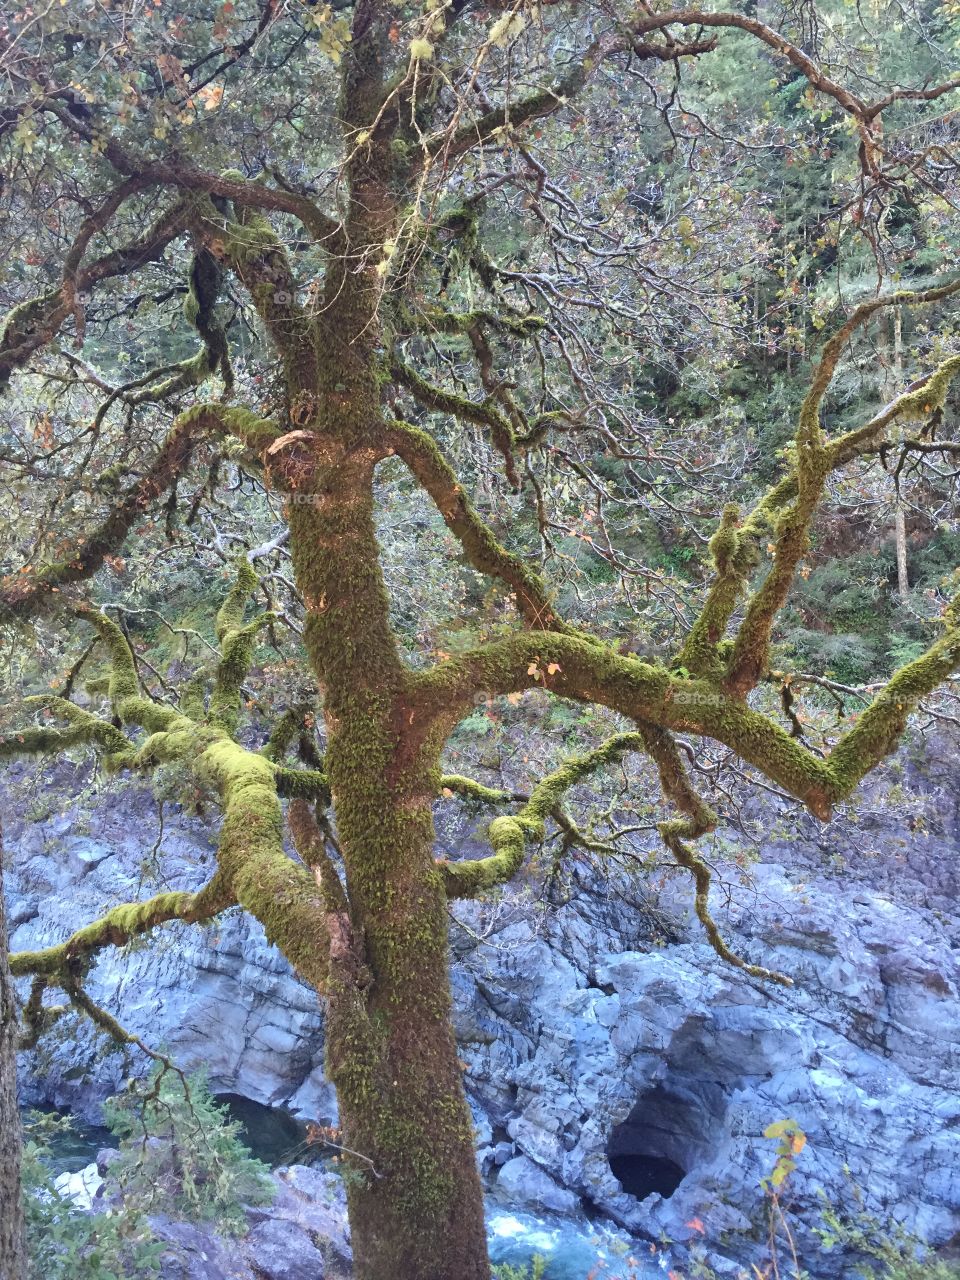 Mossy tree